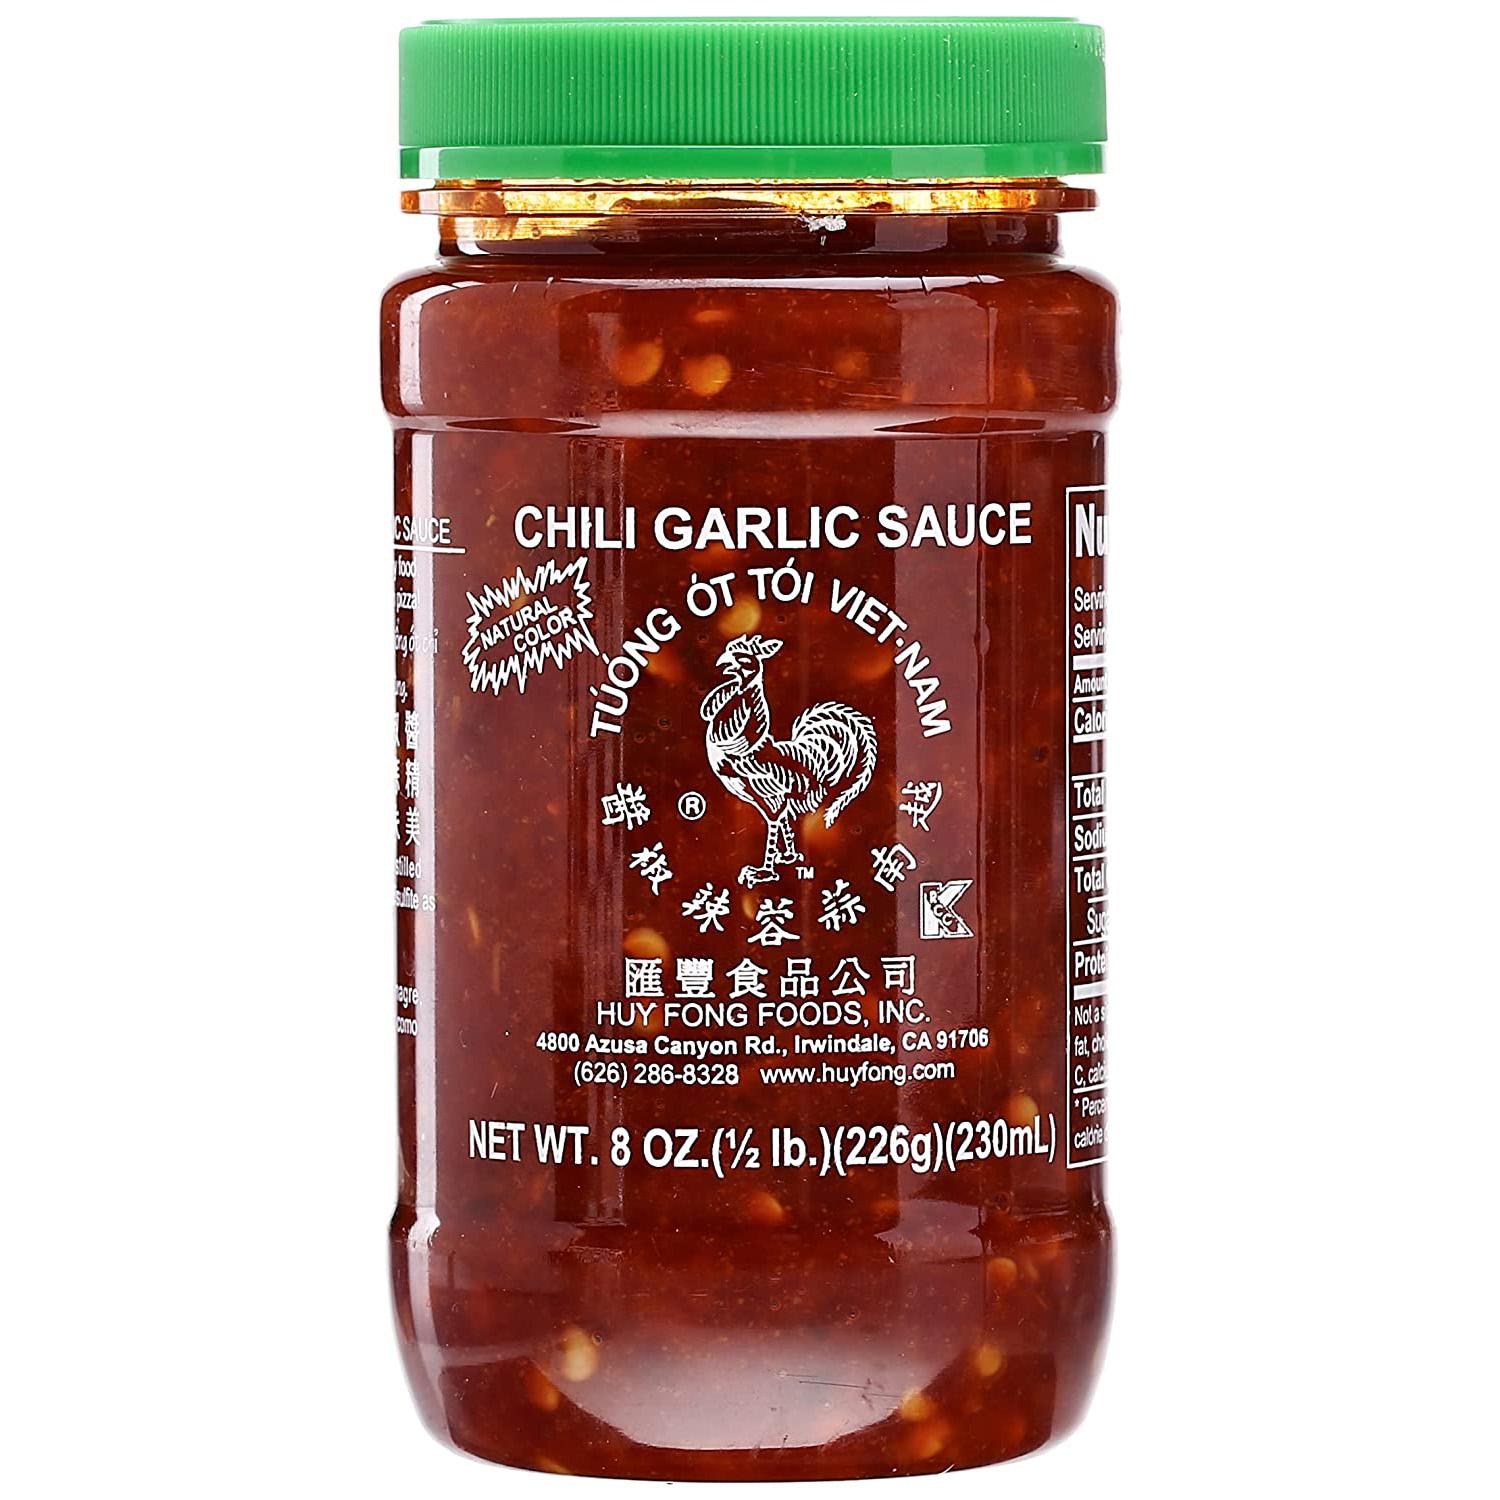 Huy Fong Chili Garlic Sauce for $1.49